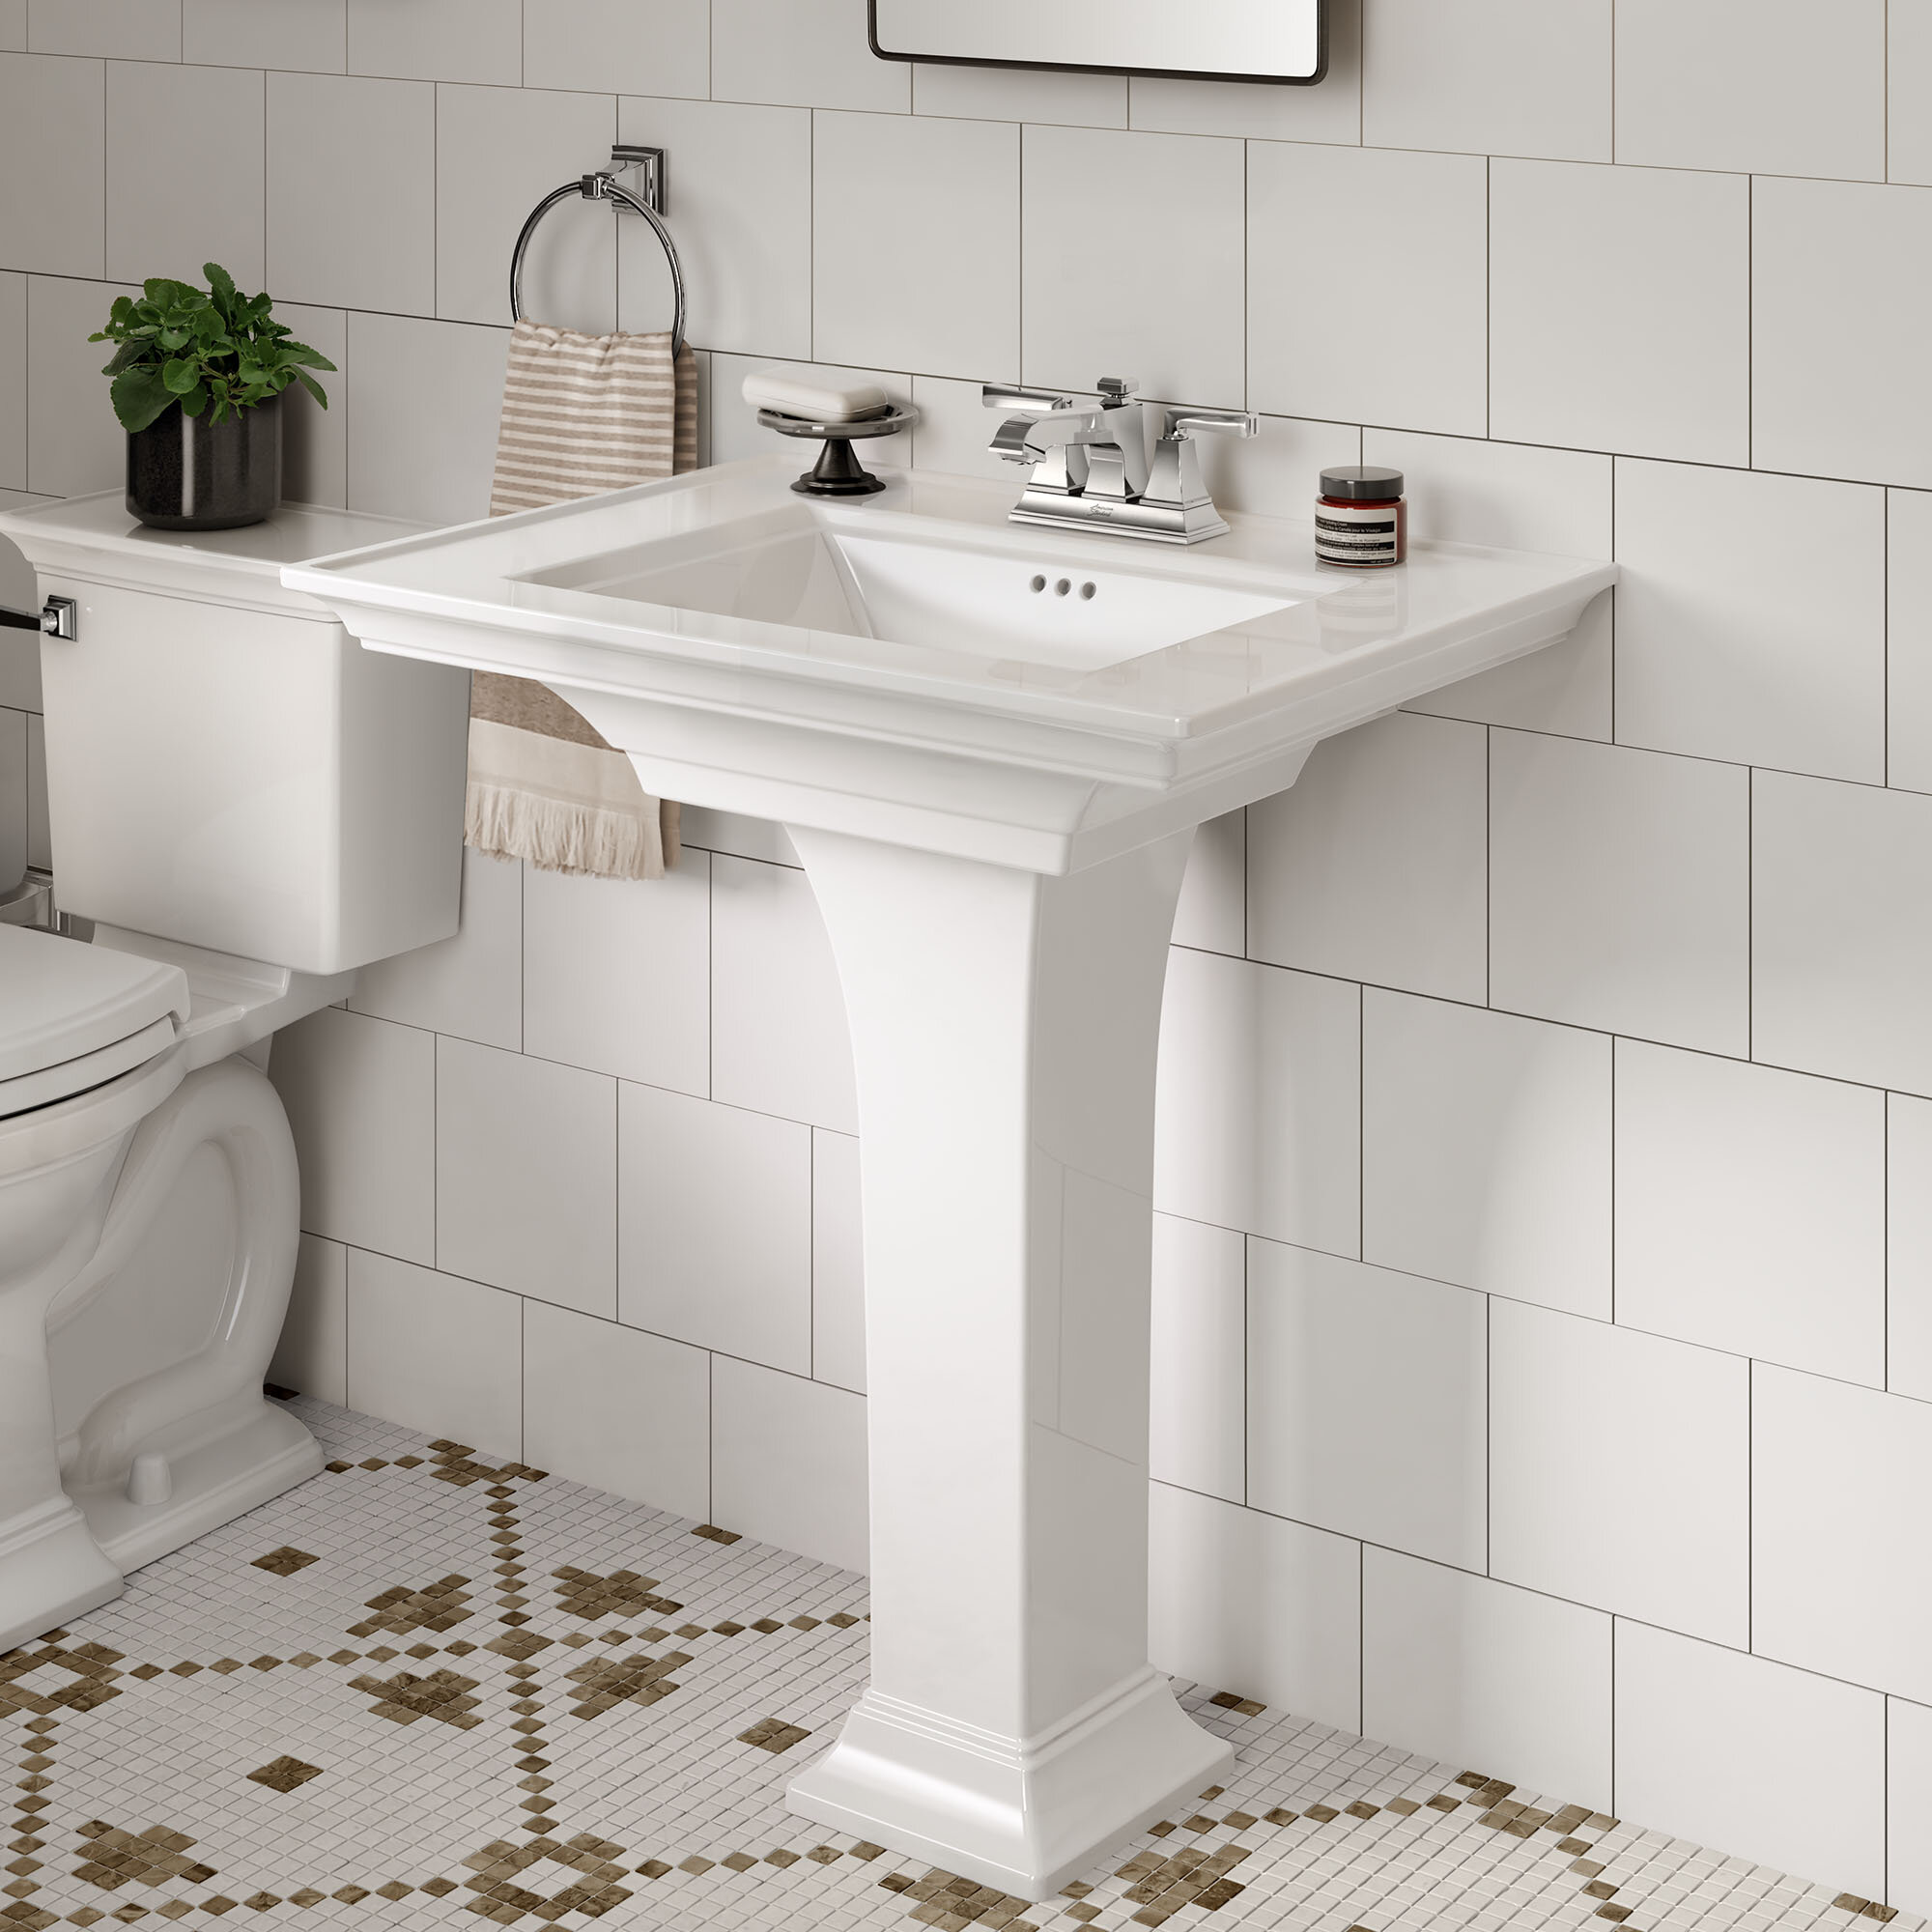 American Standard Town White Ceramic Rectangular Pedestal Bathroom Sink With Overflow Reviews Wayfair